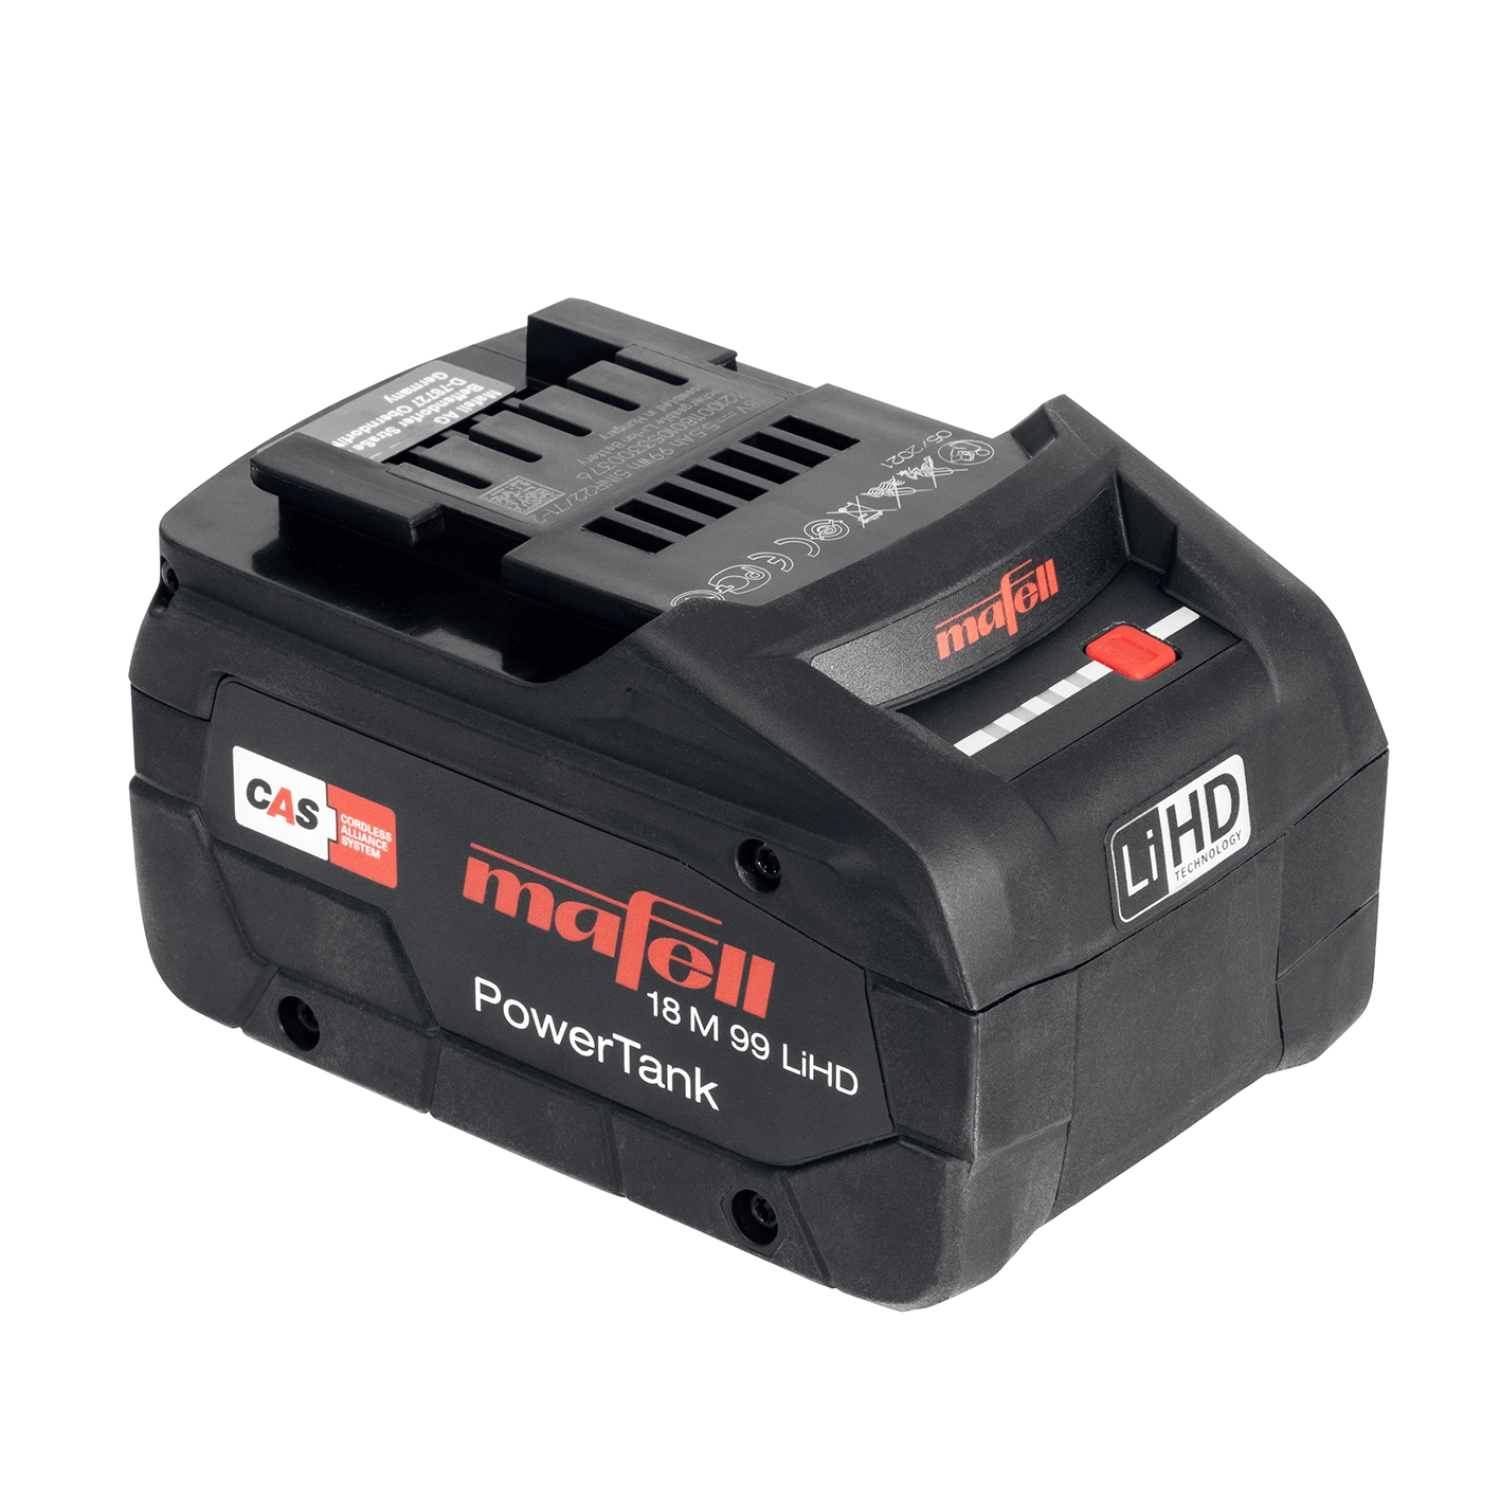 Mafell 18V LiHD batterie PowerTank 18 M 99 - 5.5 Ah-image